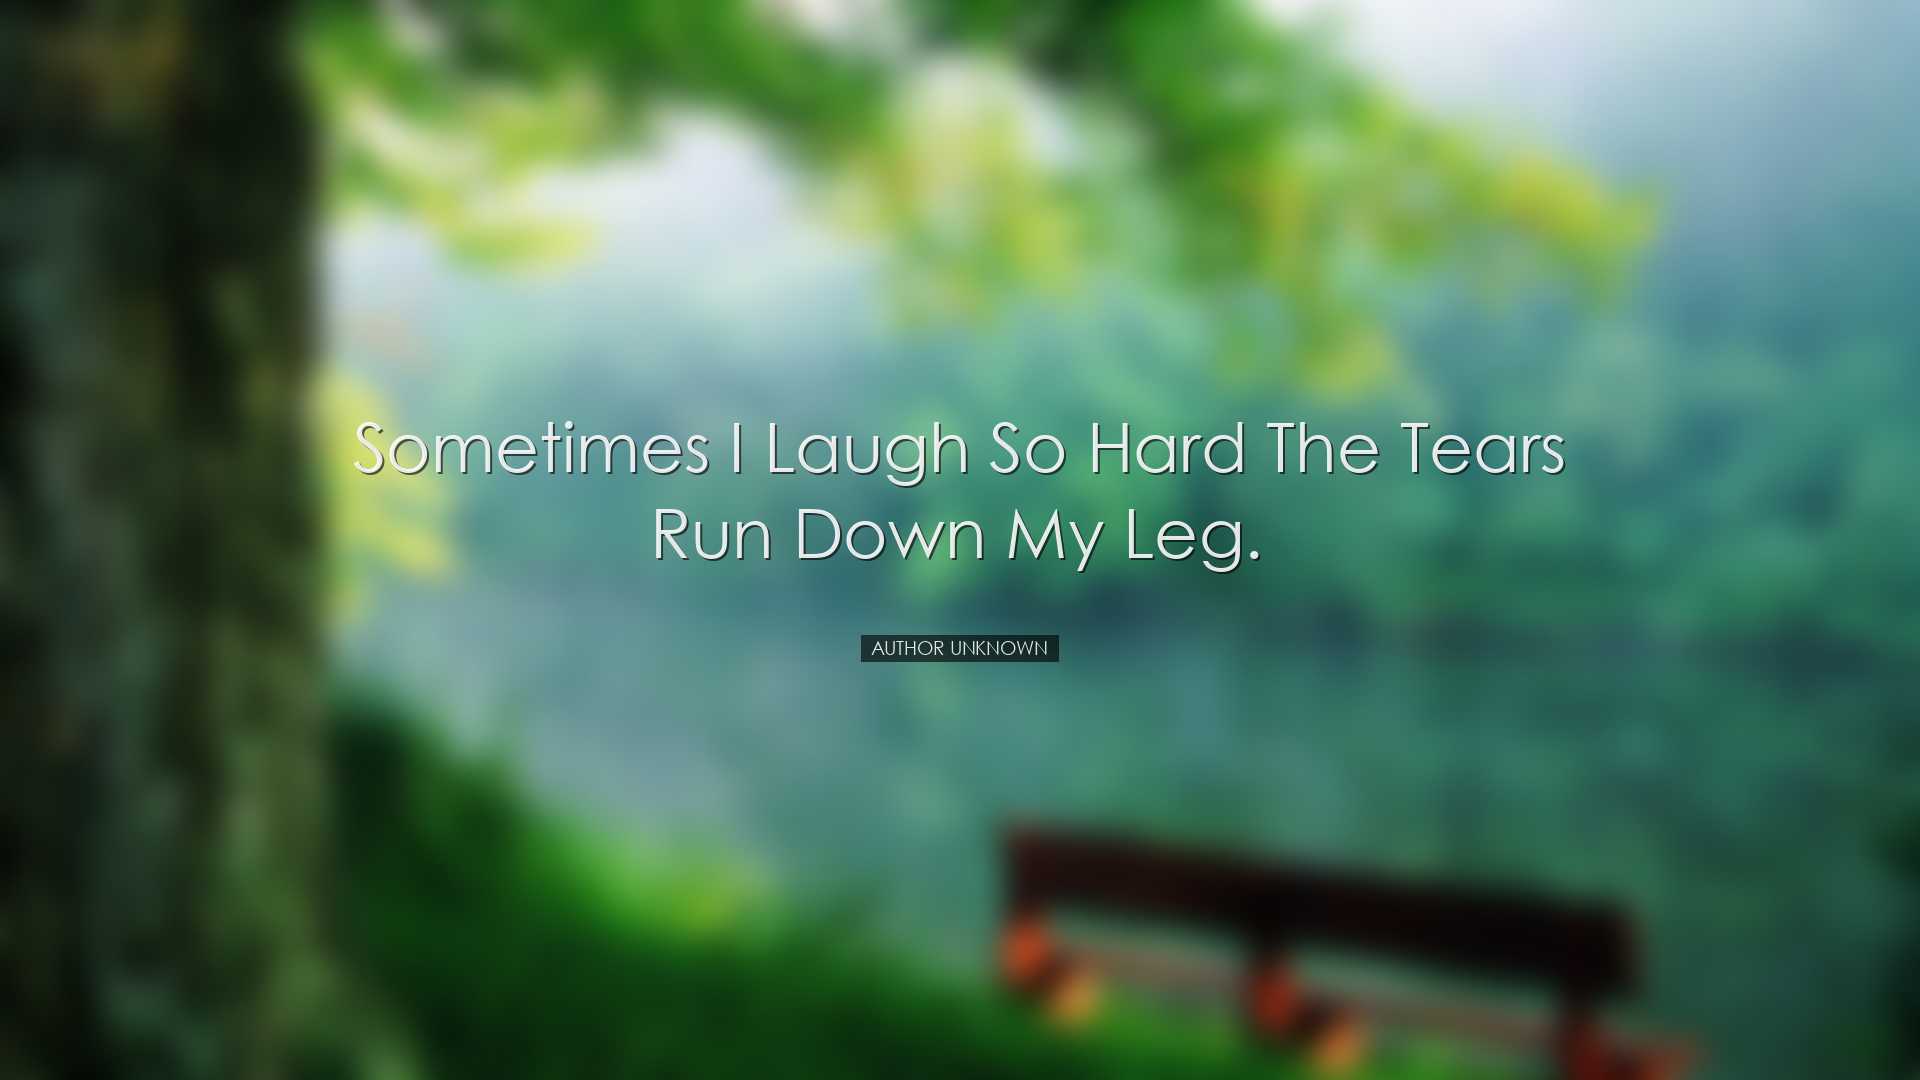 Sometimes I laugh so hard the tears run down my leg. - Author Unkn